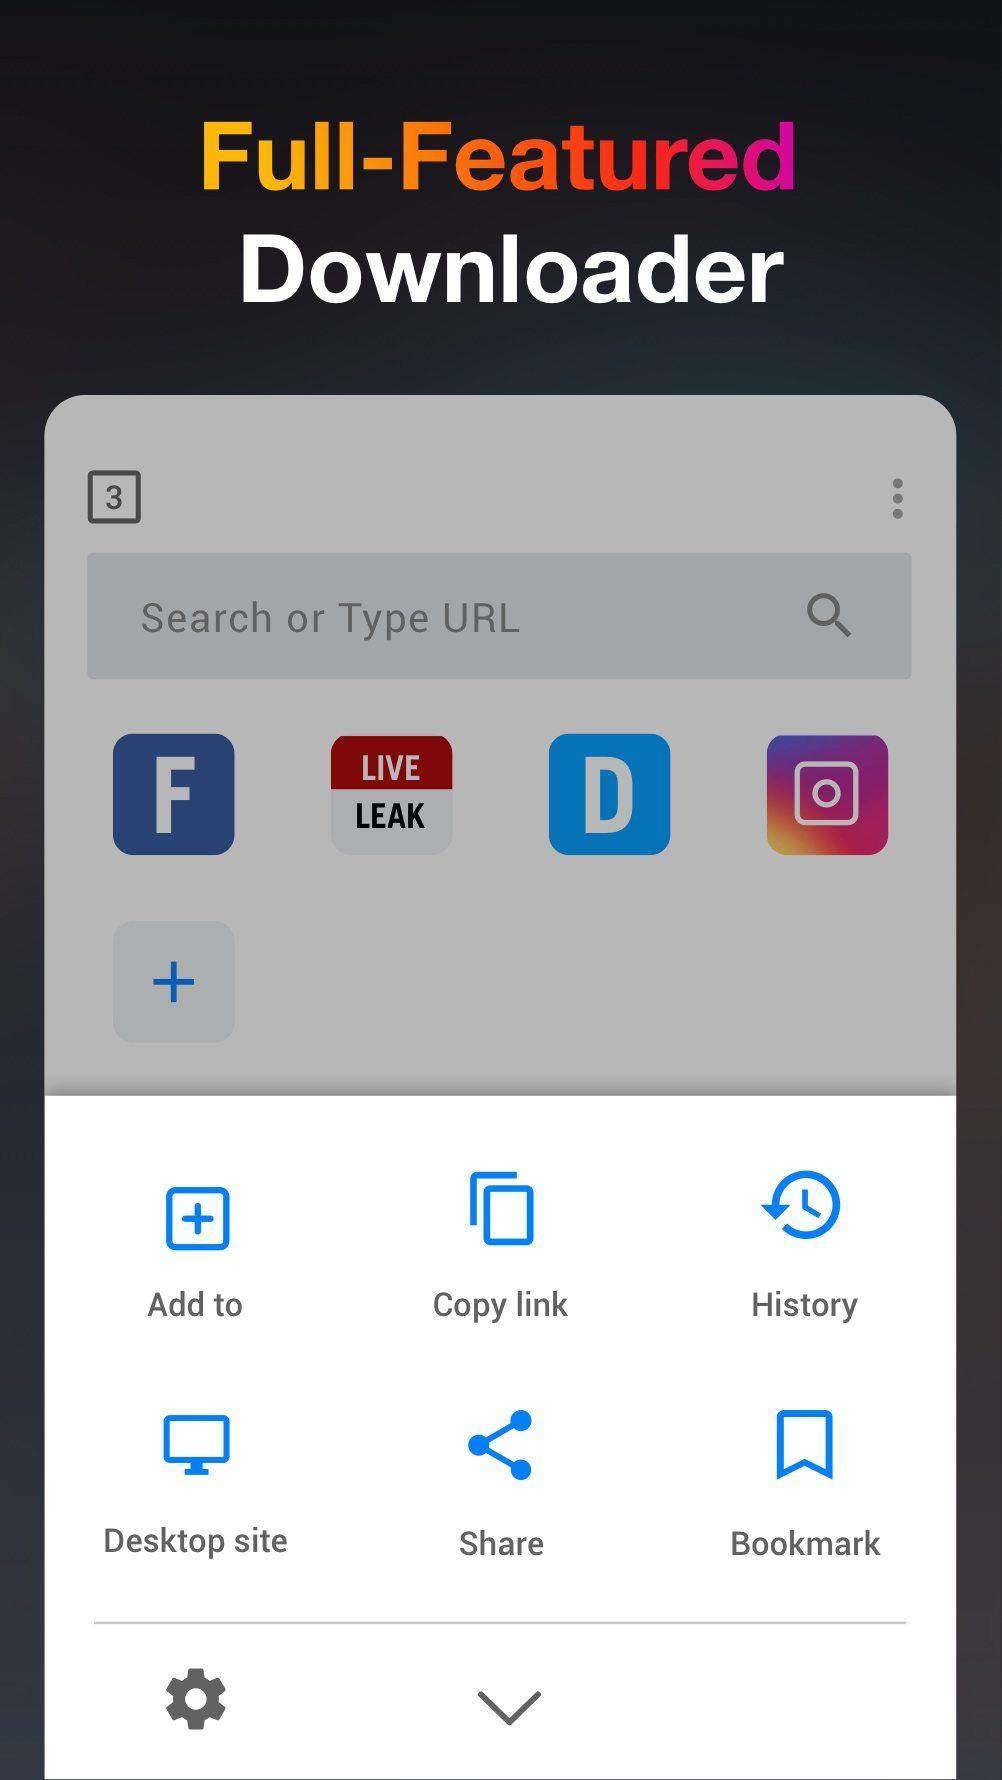 HD Video Downloader App - 2019 1.0.5 Screenshot 5